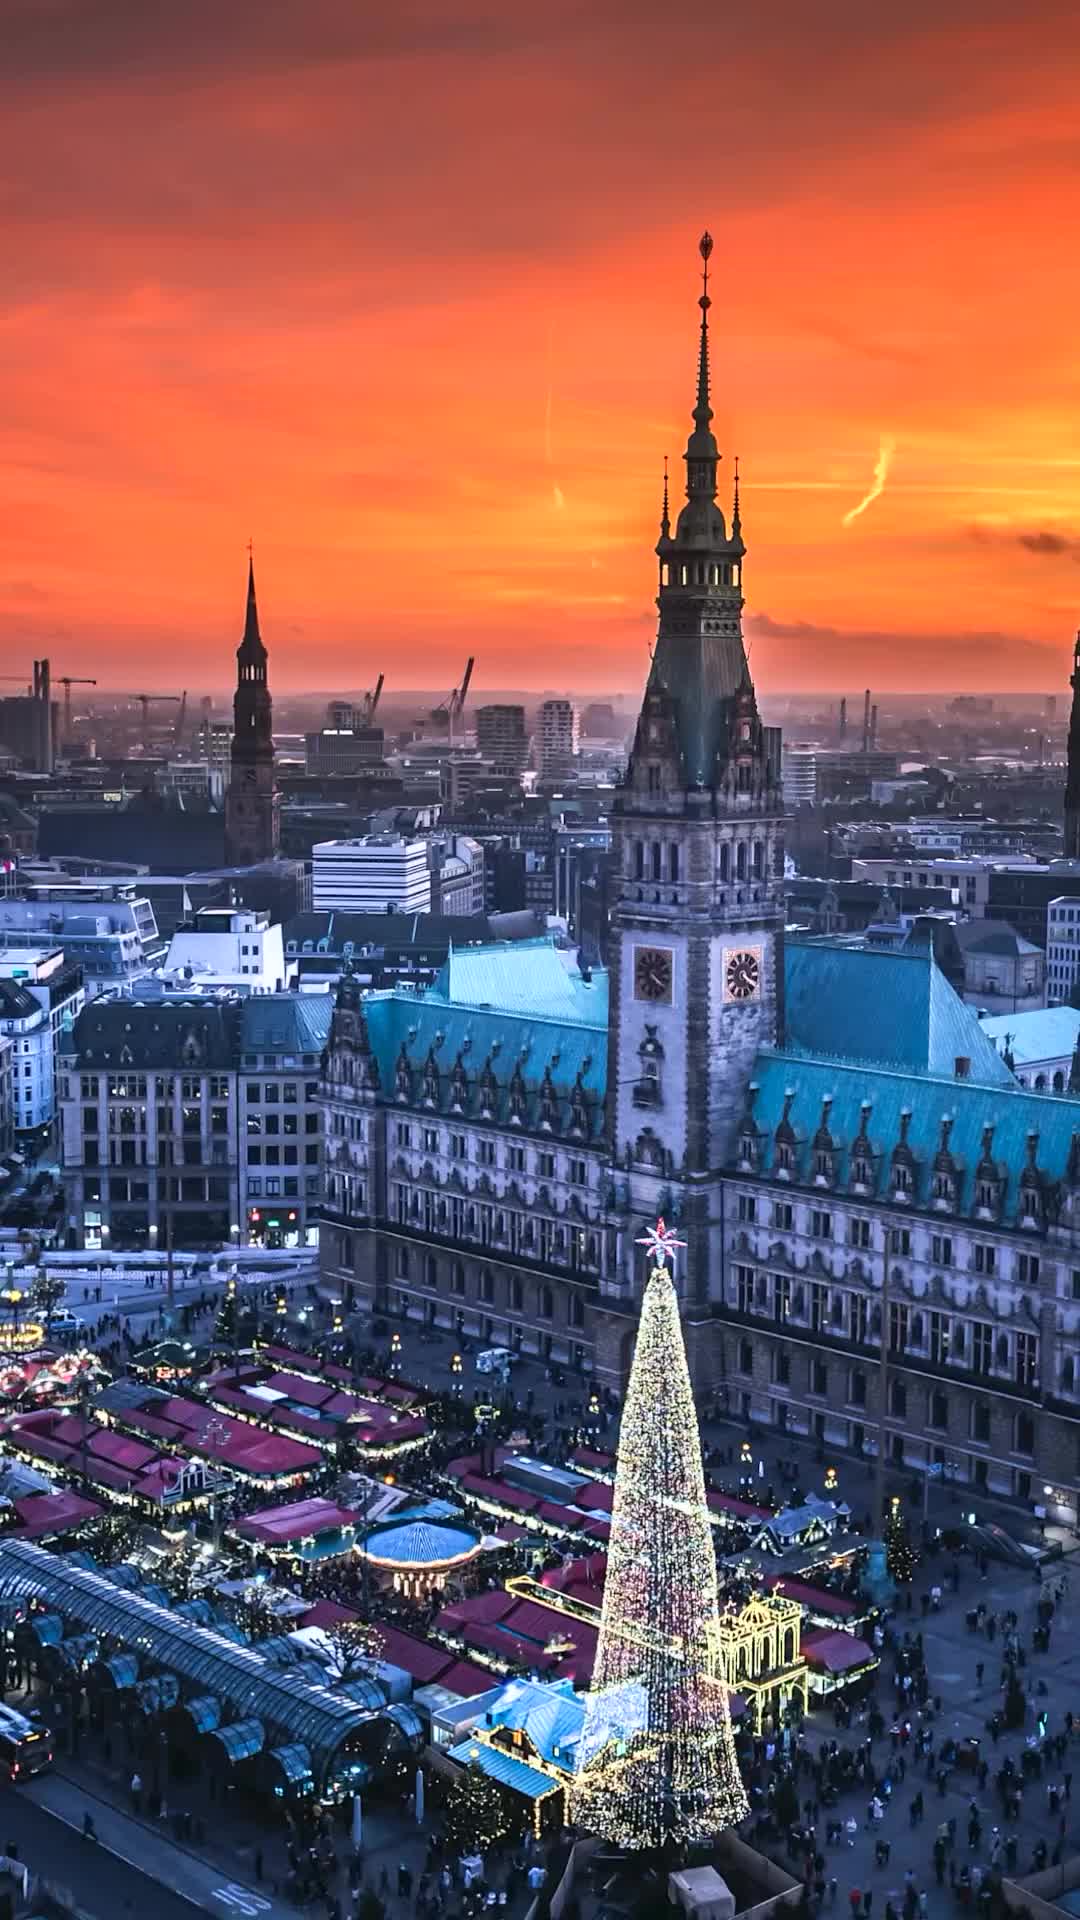 Christmas Market in Hamburg at Sunset – Windy Day Magic